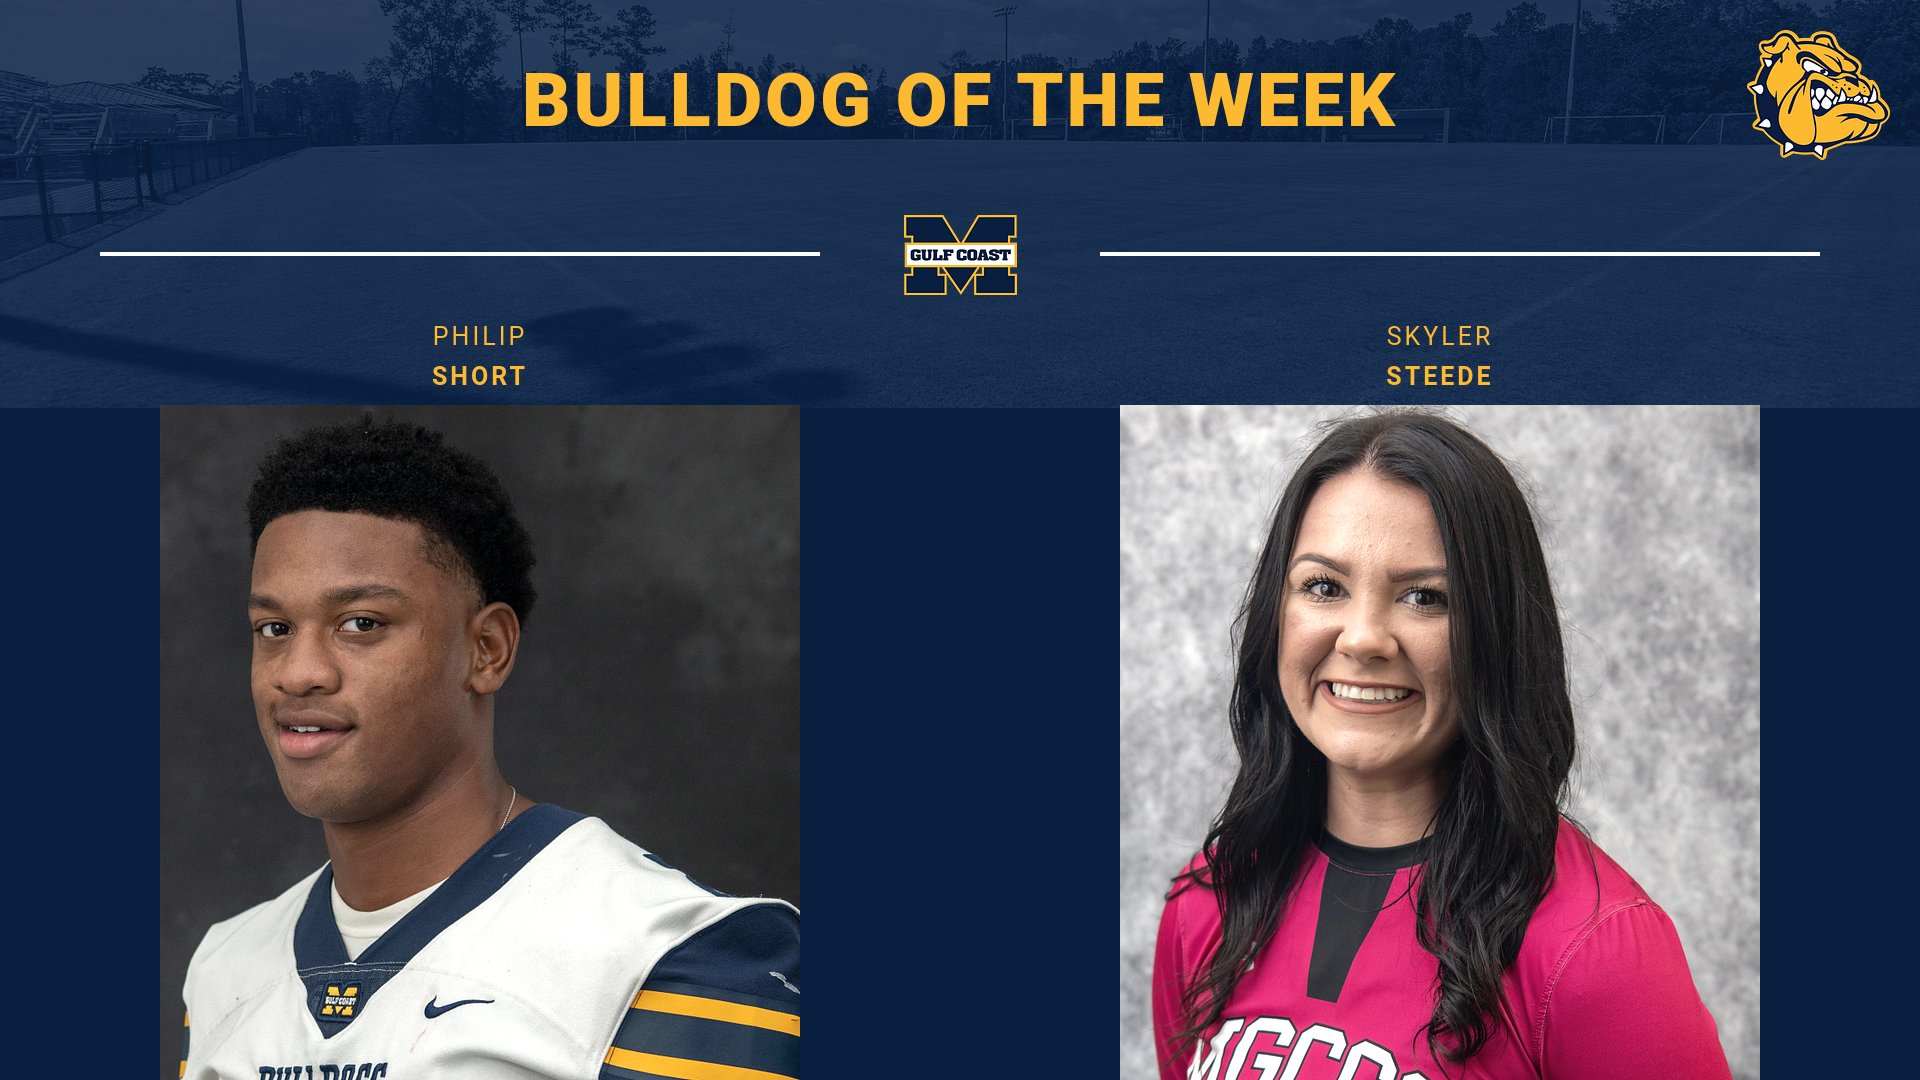 Short, Steede named Bulldogs of the Week